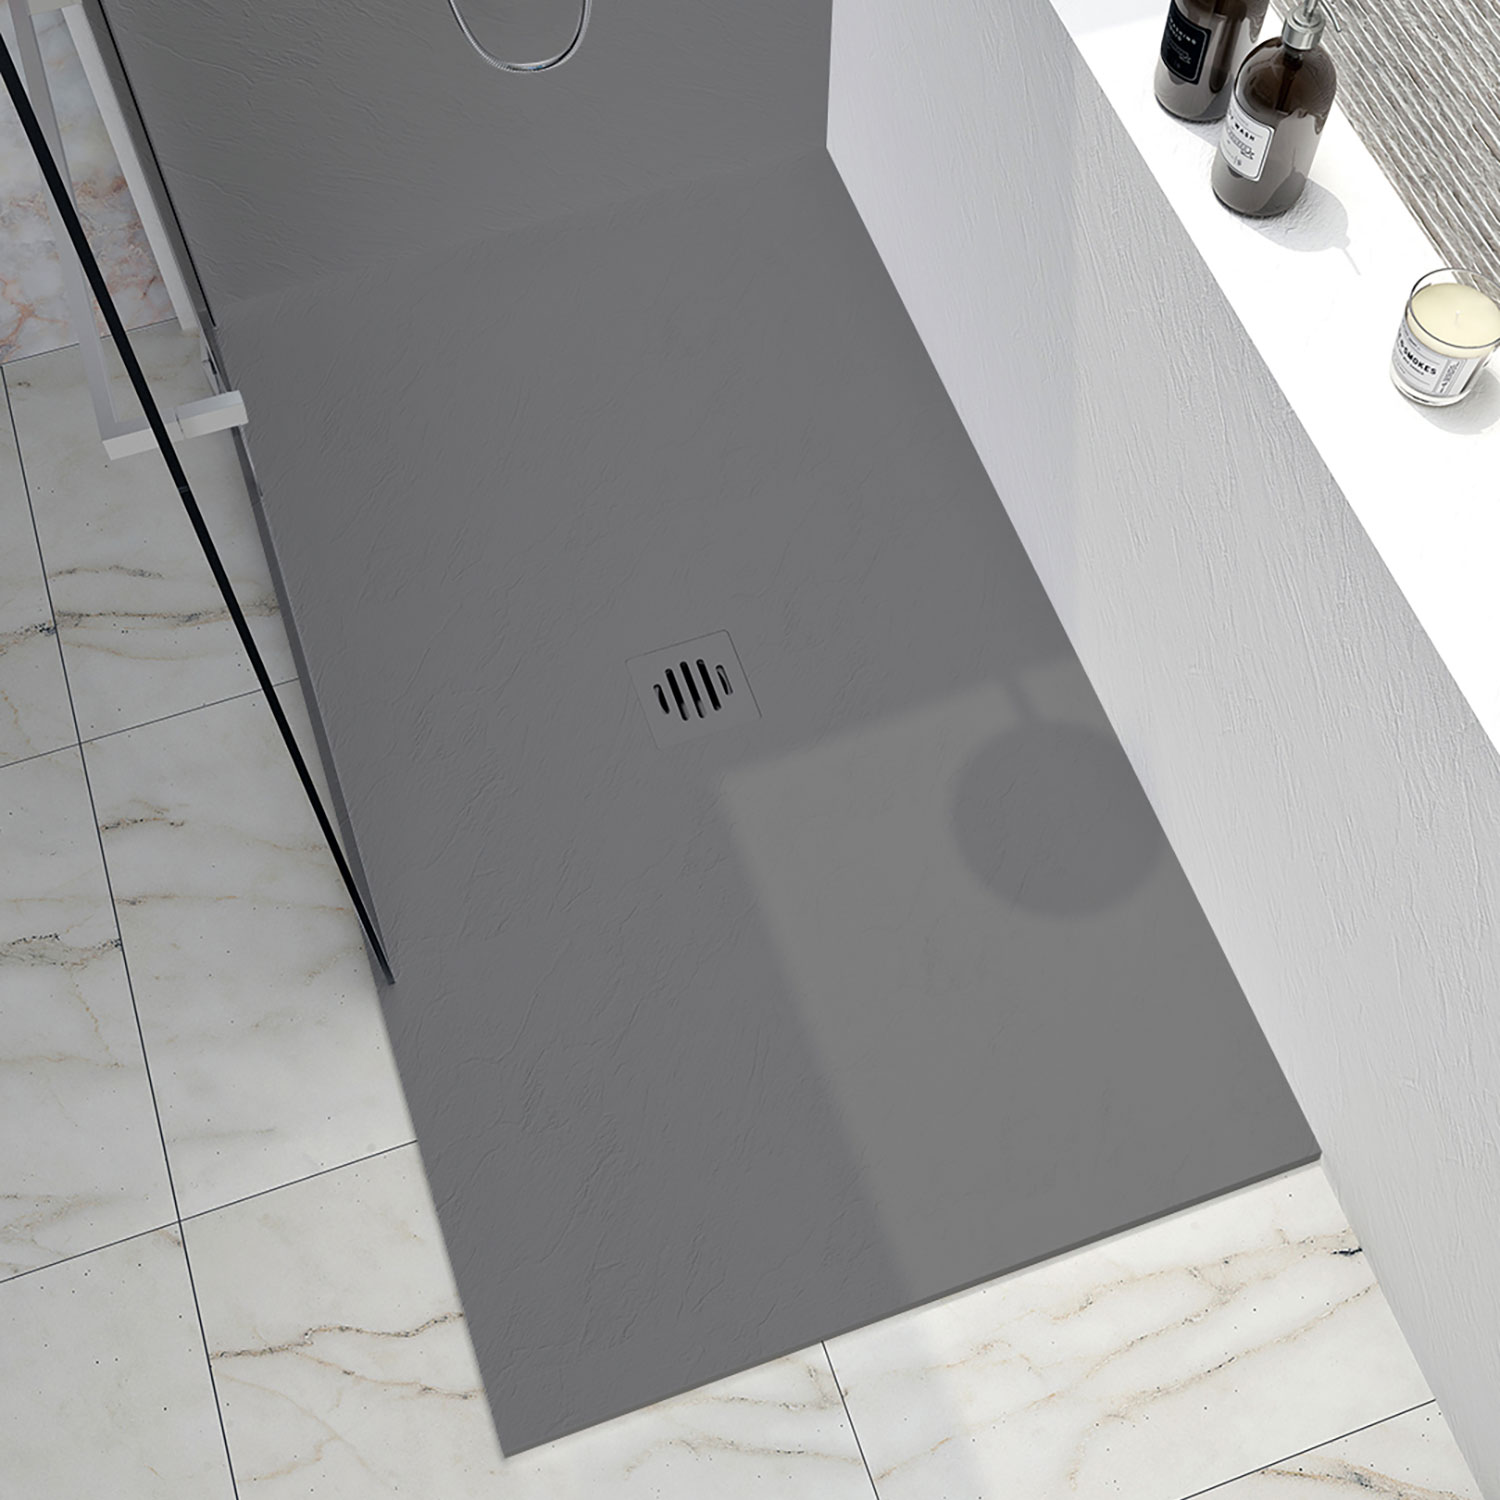 Shower base Slate 60 x 32, custom-made tile flange installation, in concrete grey